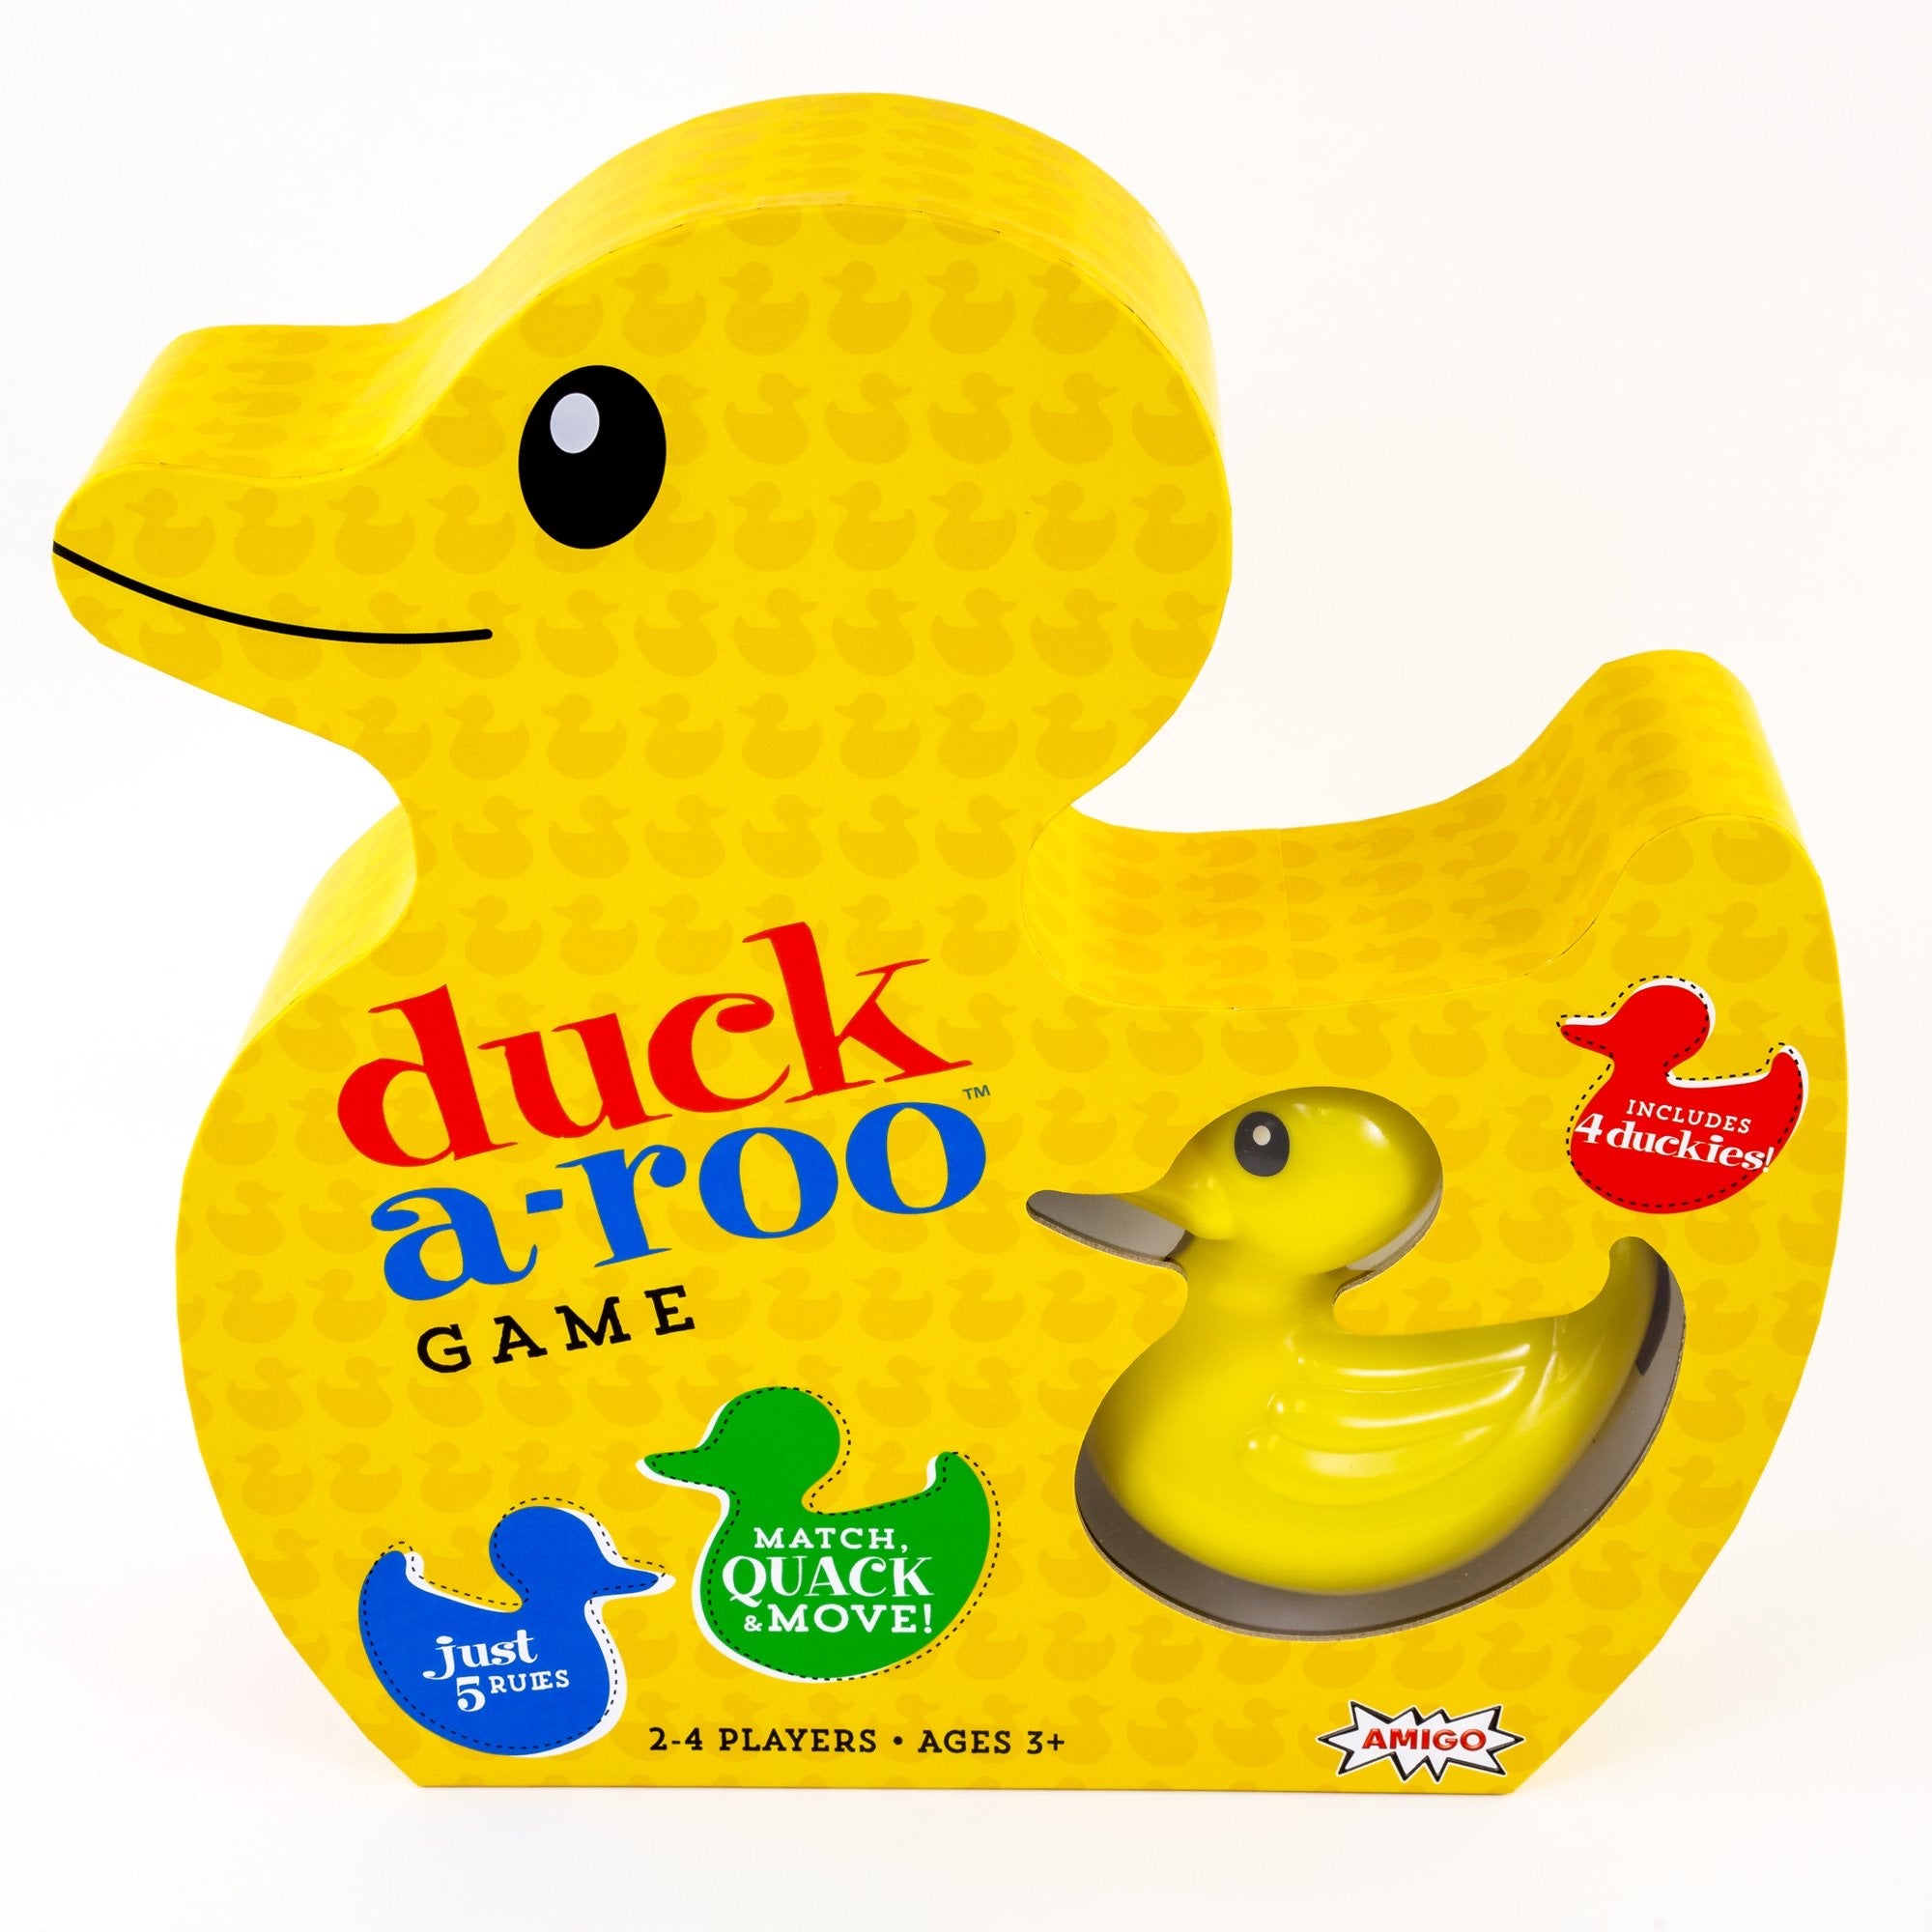 duck - a - roo